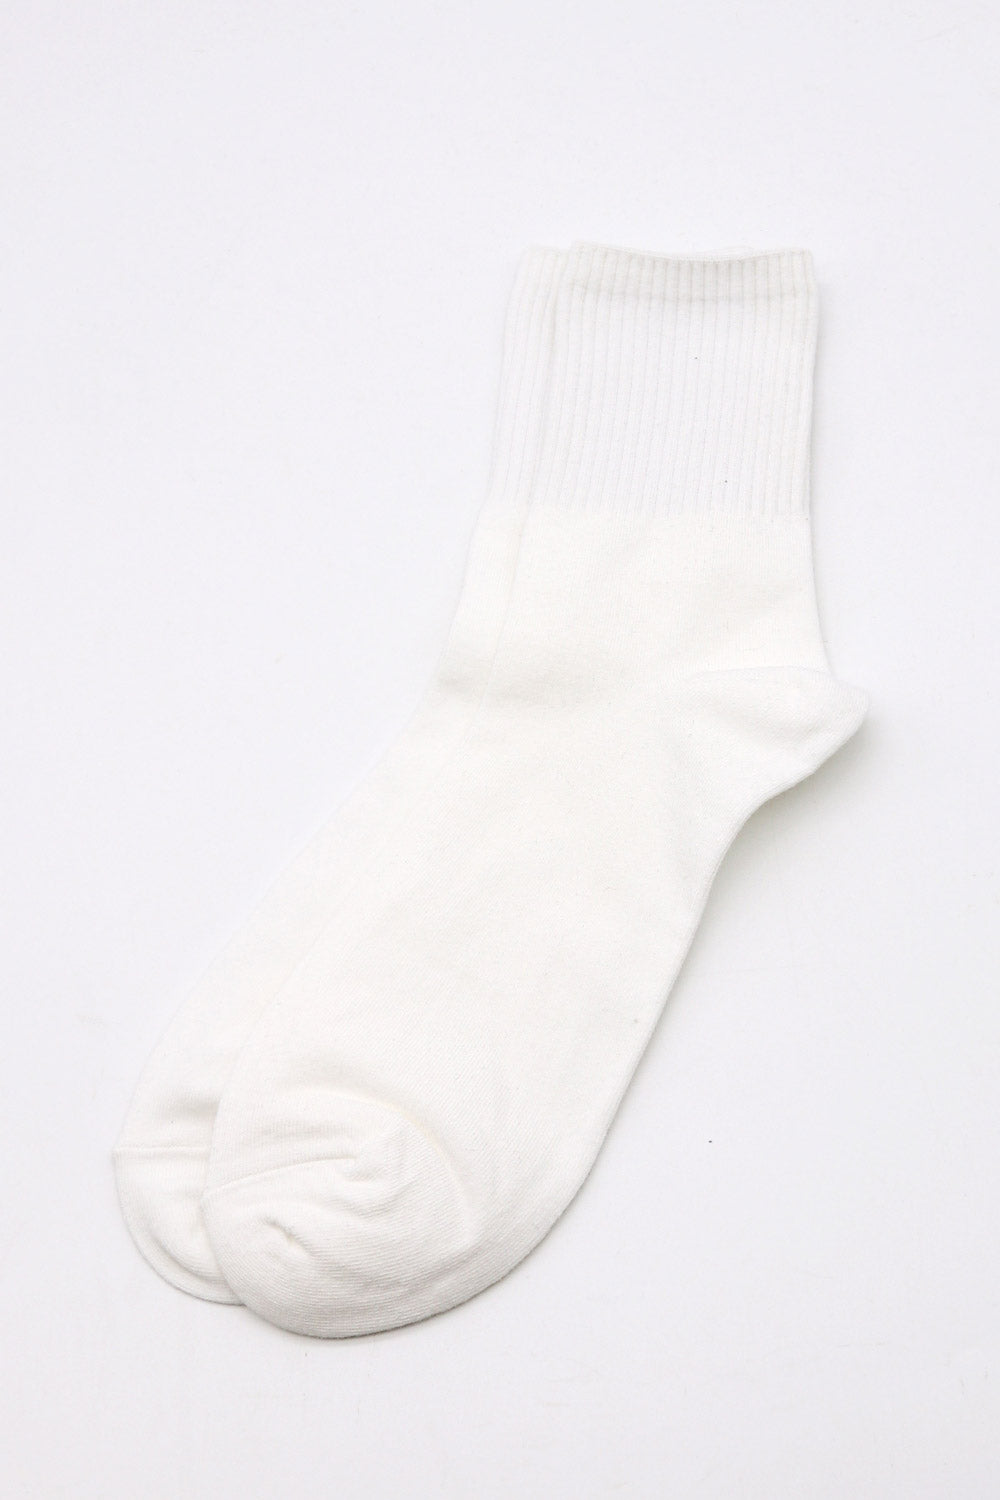 STORETS.us Unisex Plain Ribbed Socks